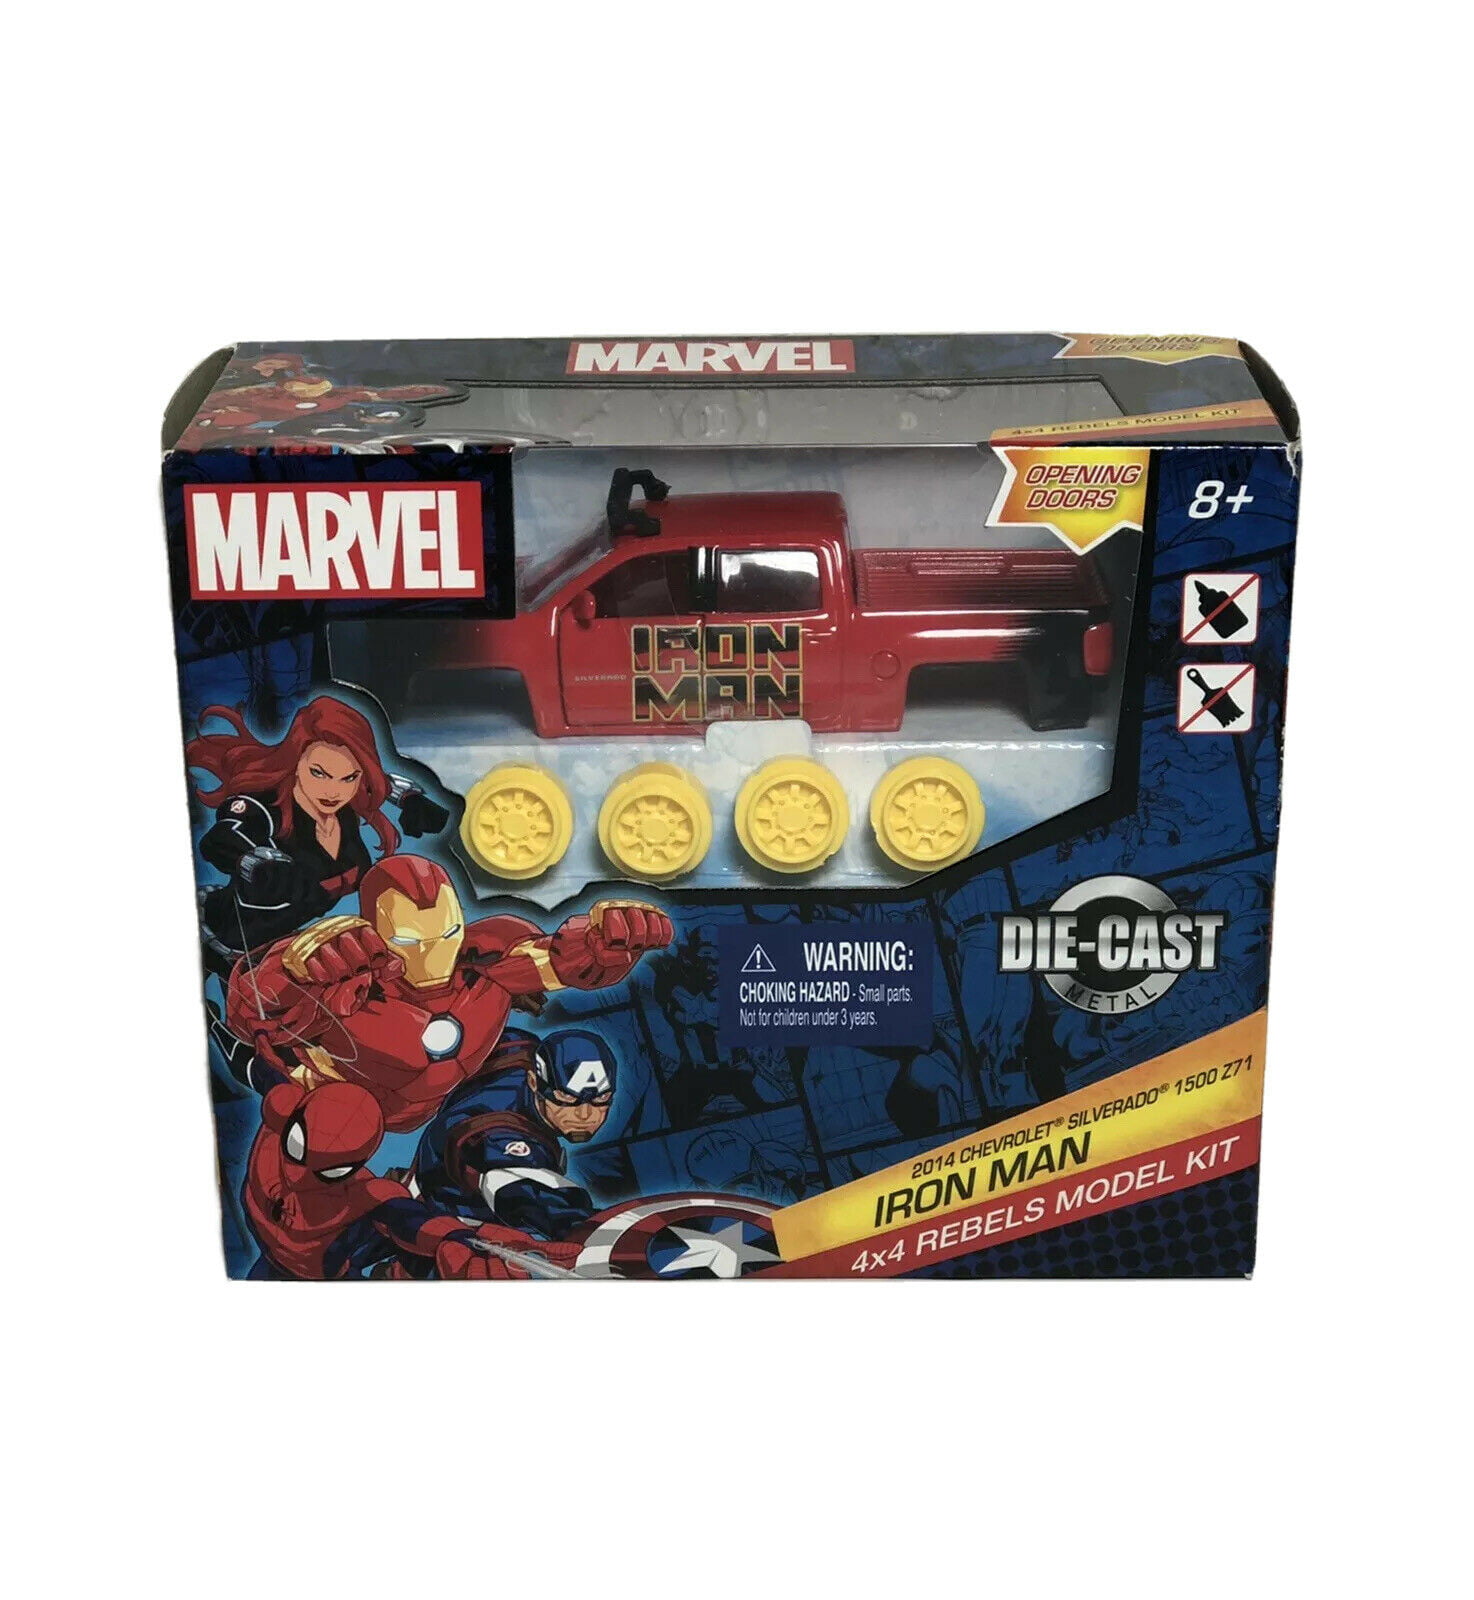 Marvel 4x4 Rebels Model Kit Iron Man 2014 Chevy Silverado 1500 Z71 for sale online